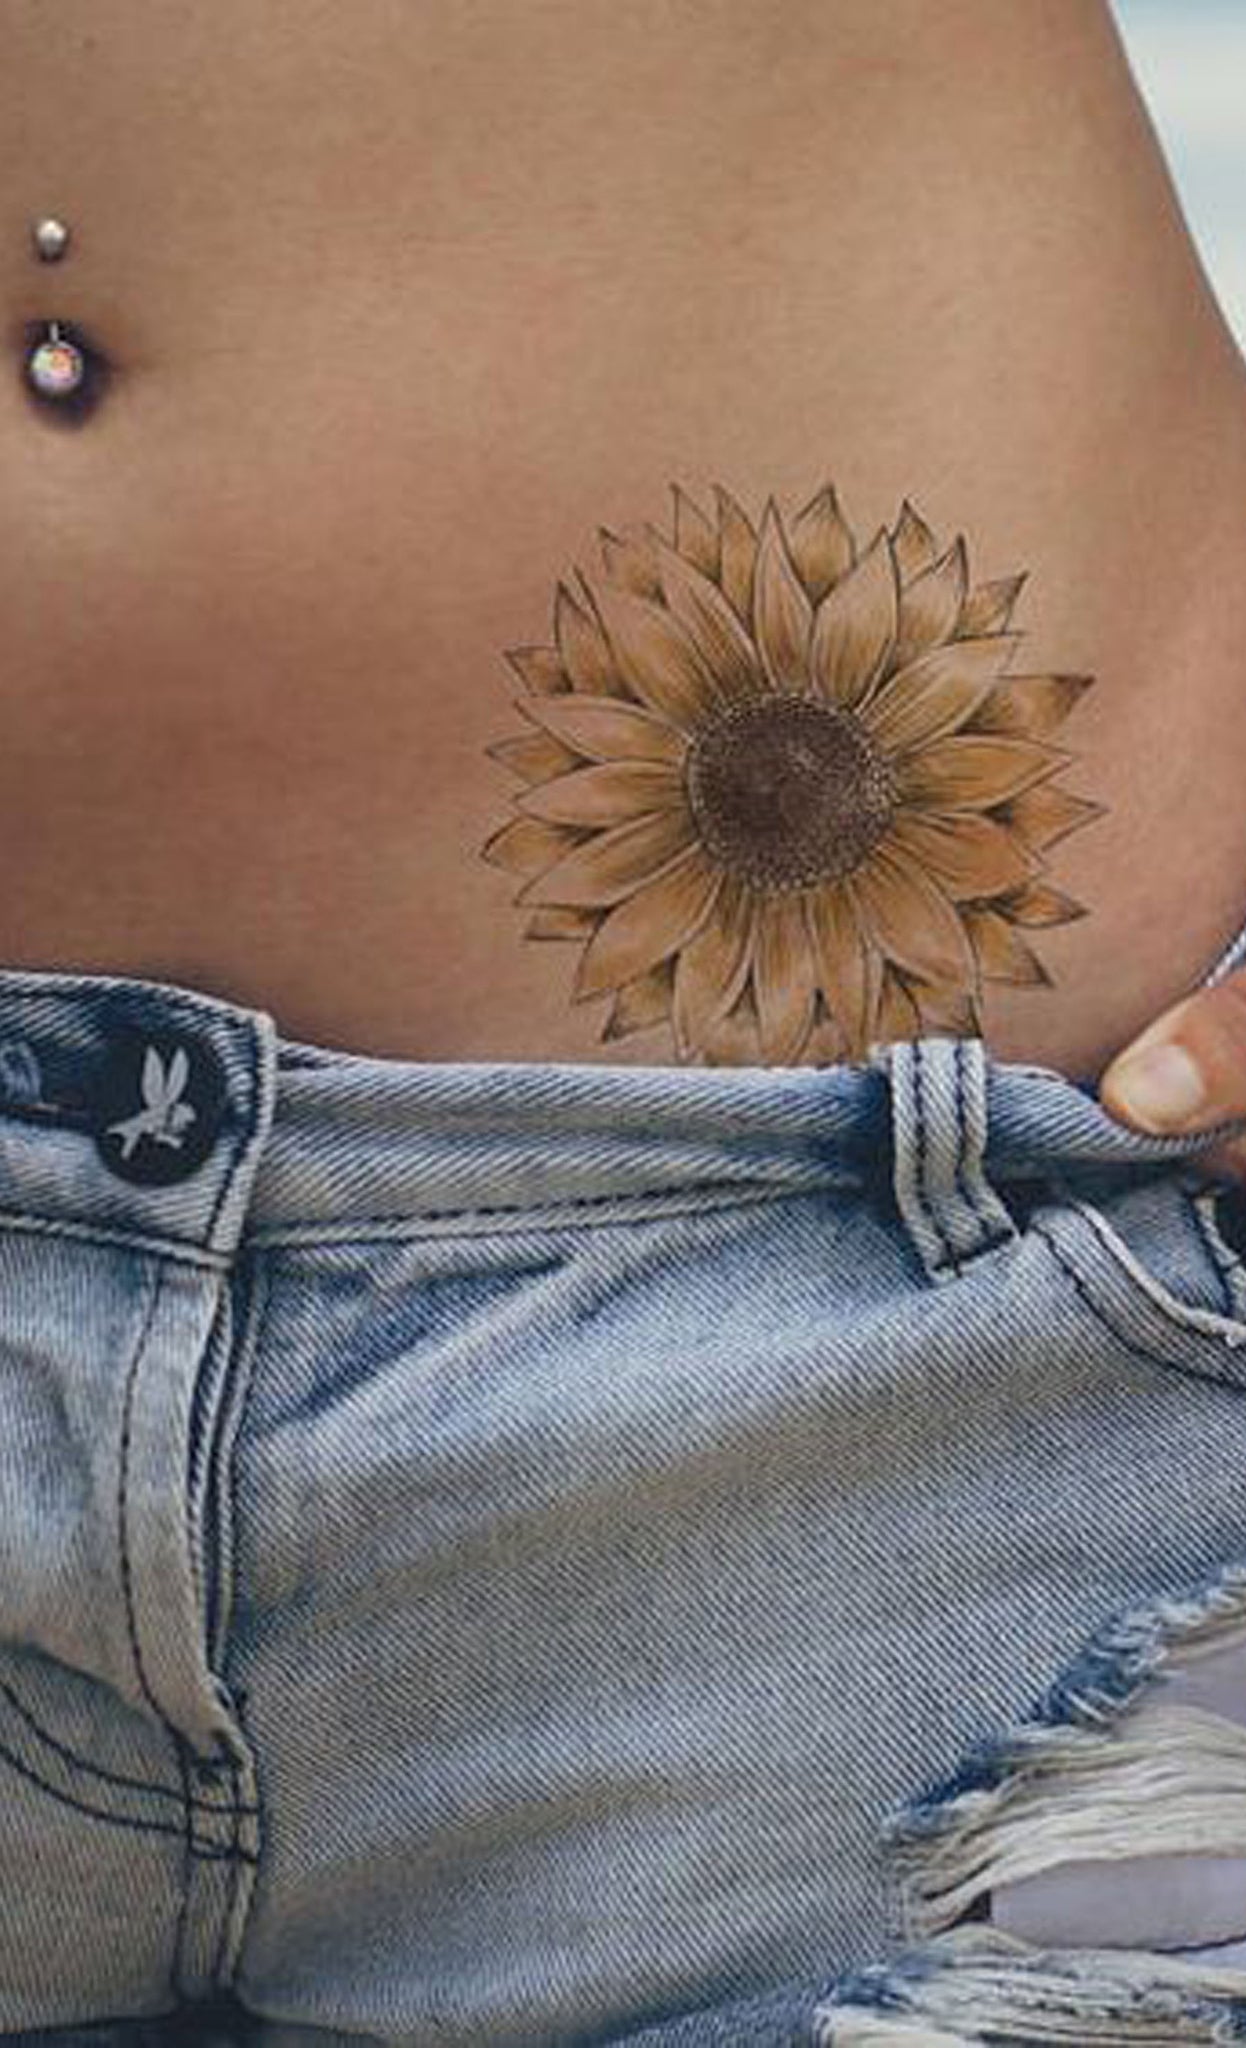 Delicate Sunflower Hip Tattoo Ideas for Women - Beautiful Flower Hip Tat - www.MyBodiArt.com #tattoos